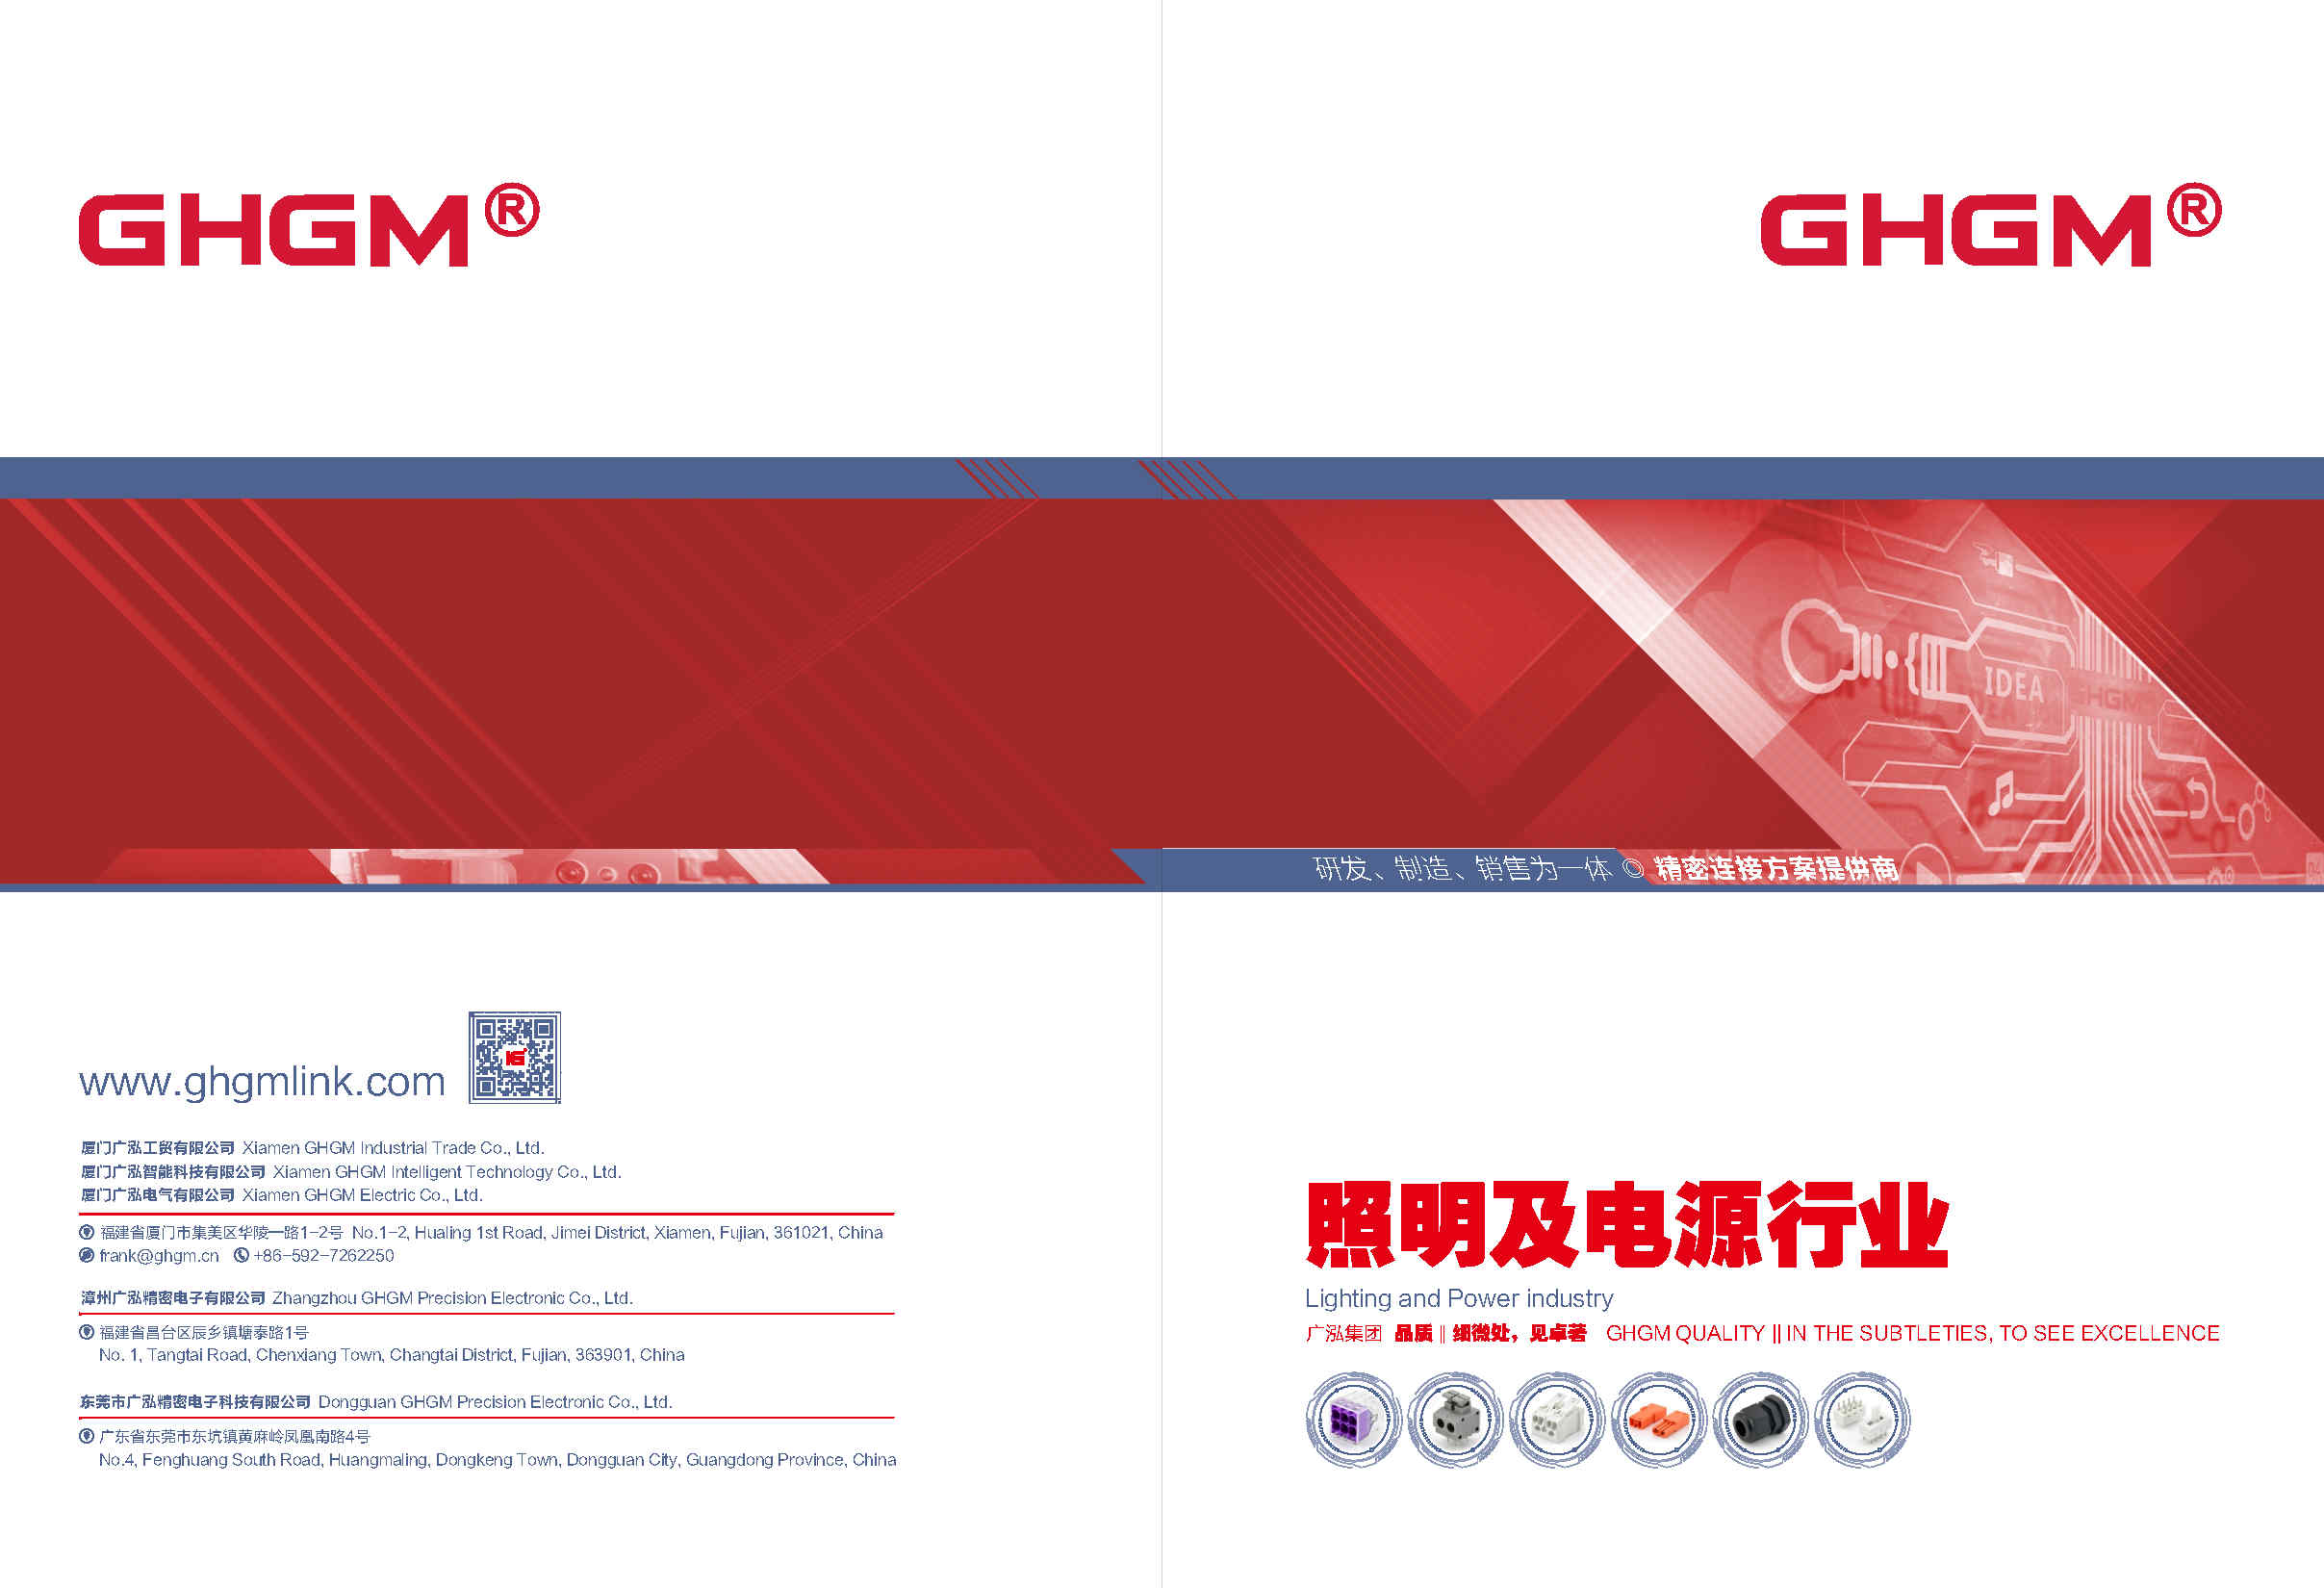 2022 GHGM, Hafif ve Güç Endüstrisi, Online katalog
